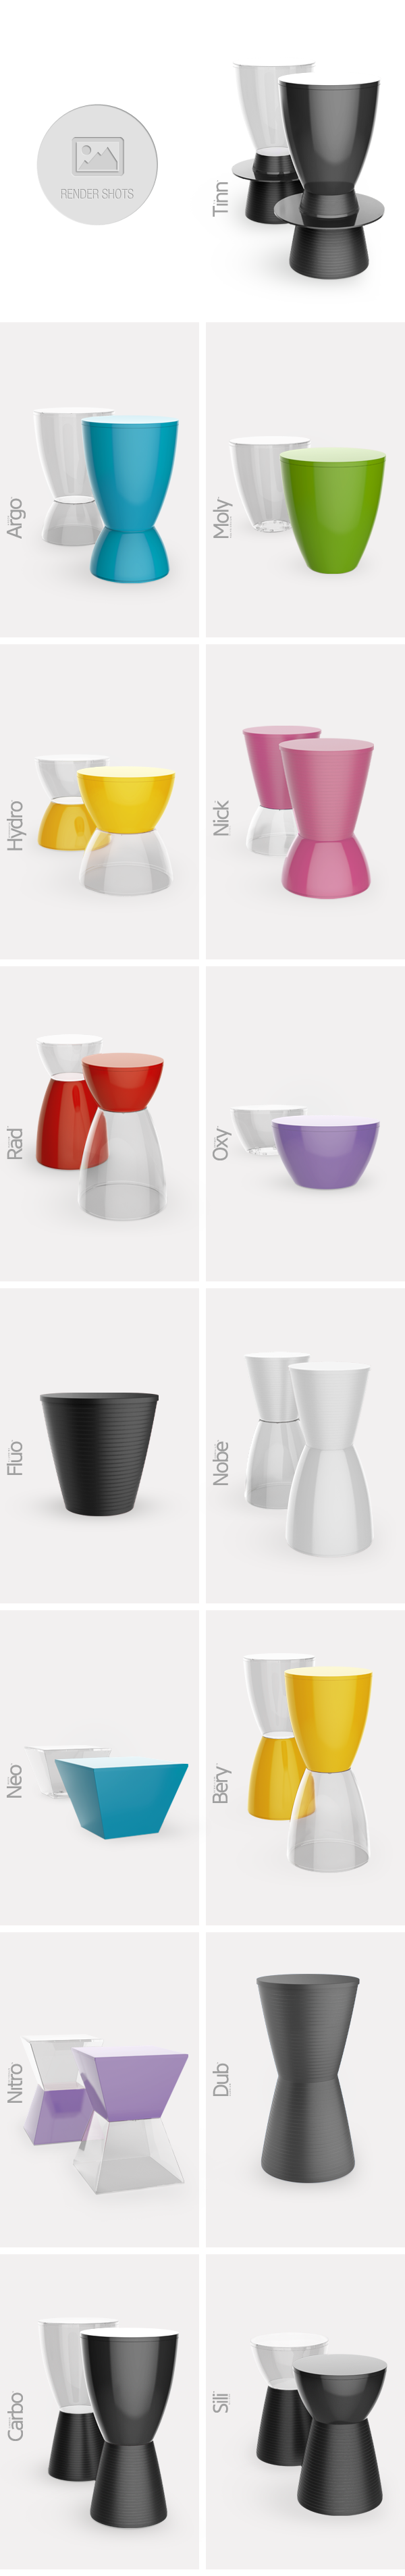 stools color modeling 3D modo Pack colors Transparency plastic photoshop modelling Render Catalogue design